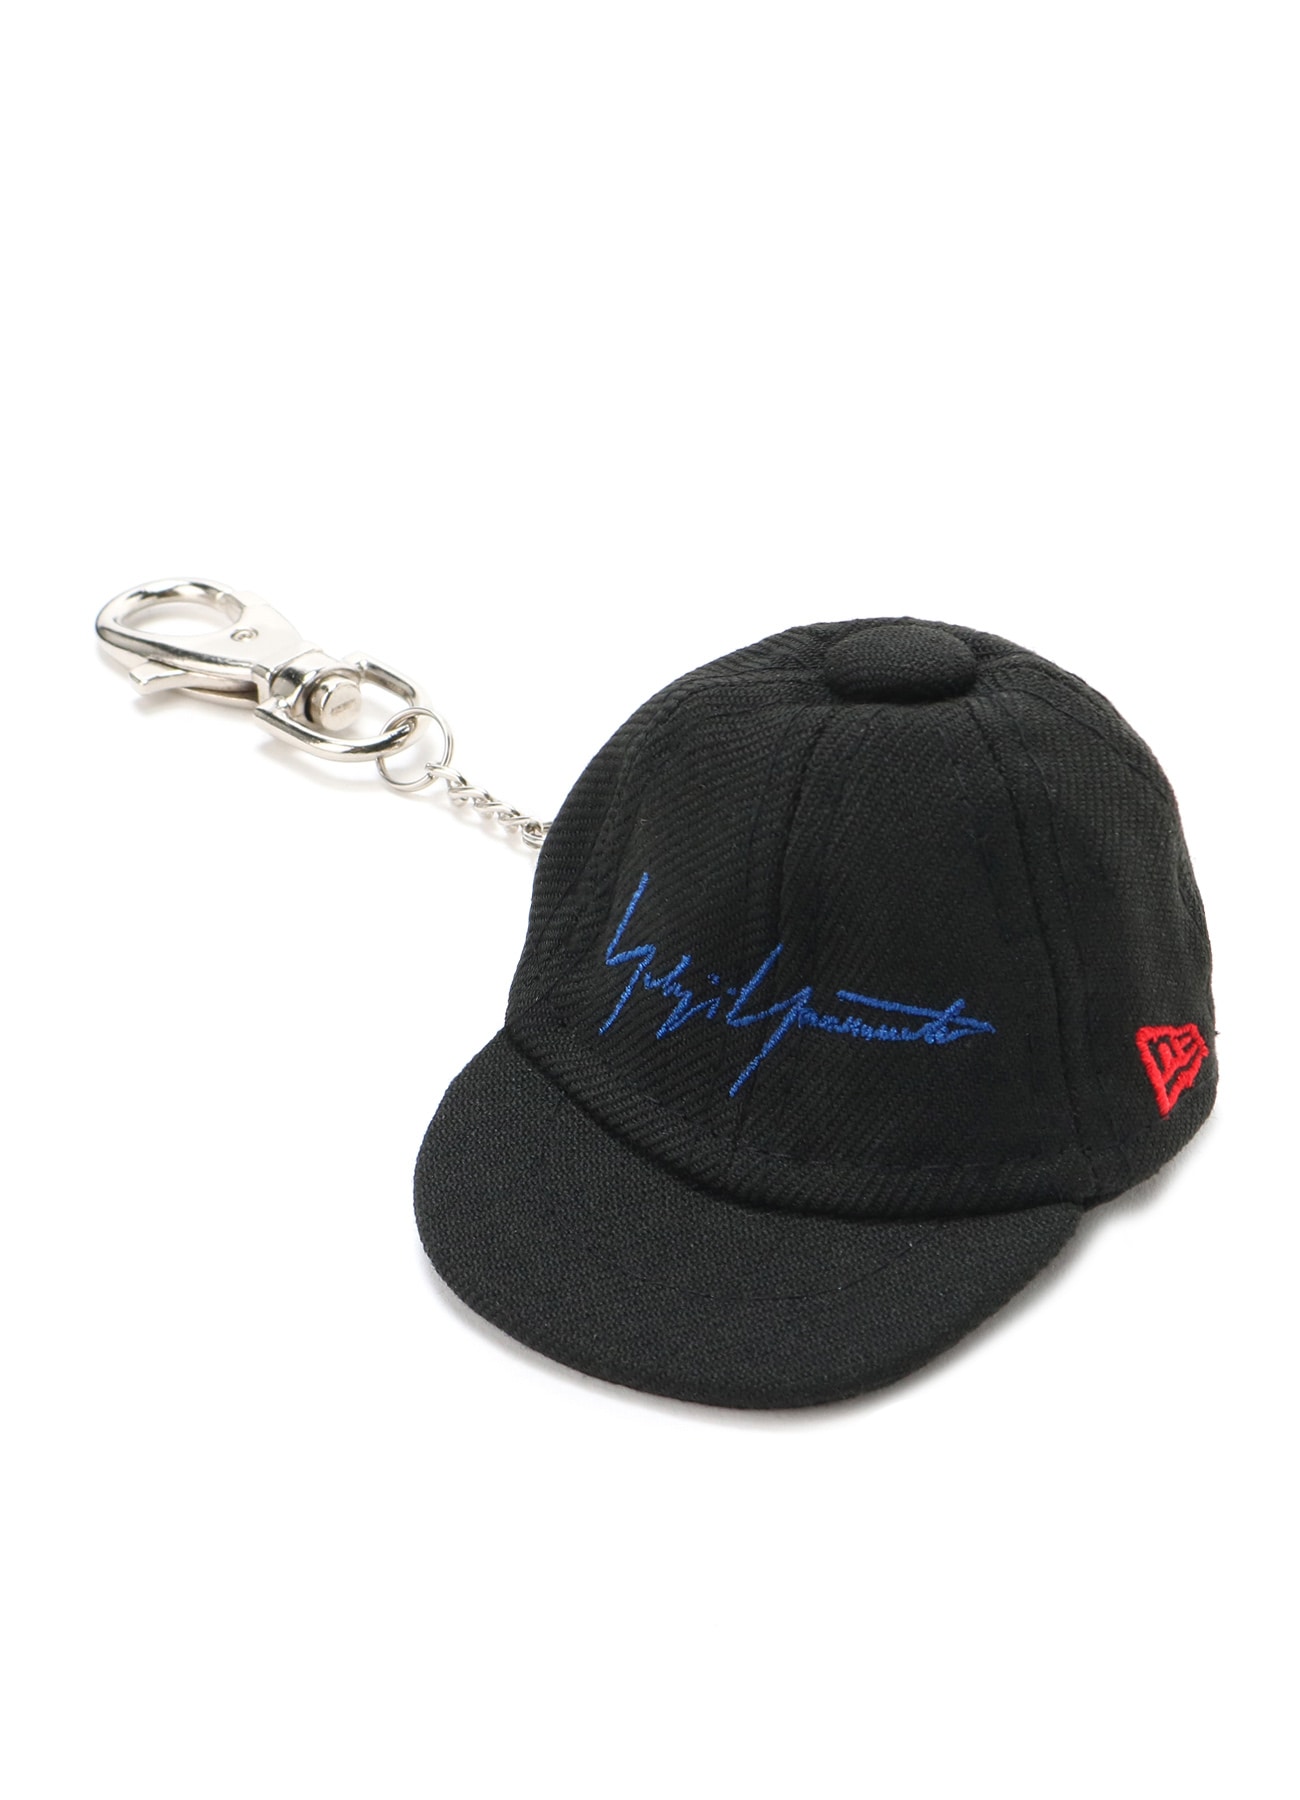 Yohji Yamamoto × New Era SIGNATURE CAP KEY HOLDER